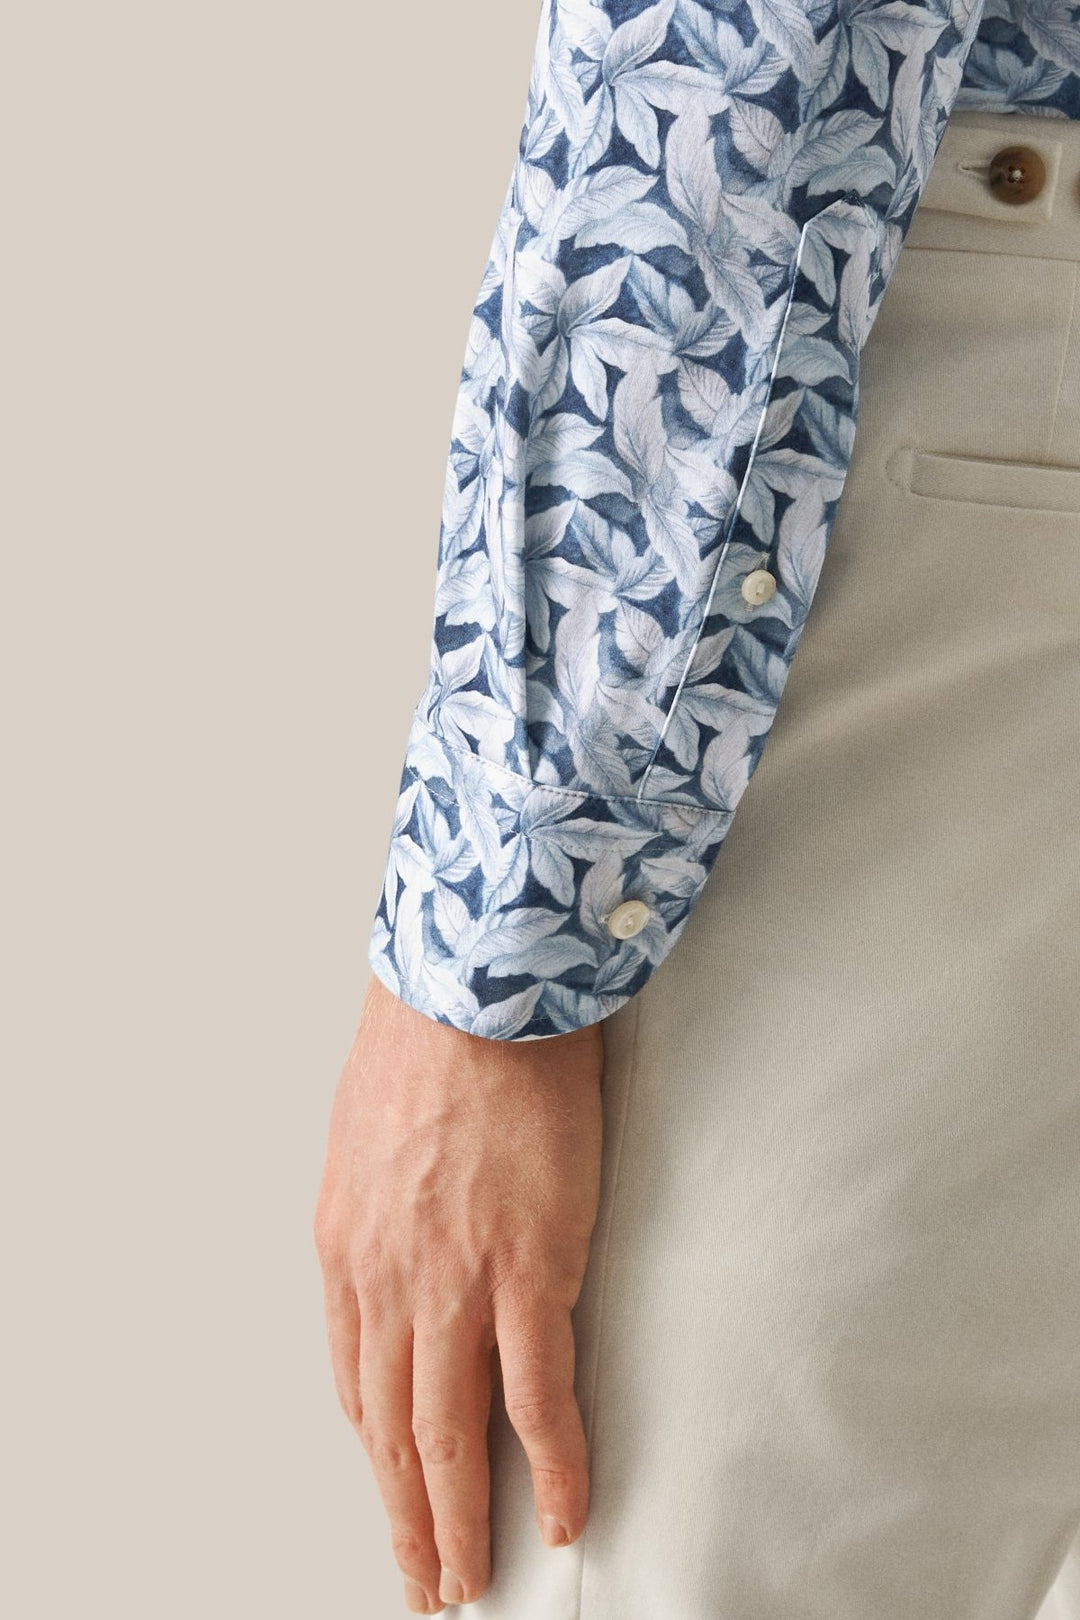 Four-way stretch cotton shirt